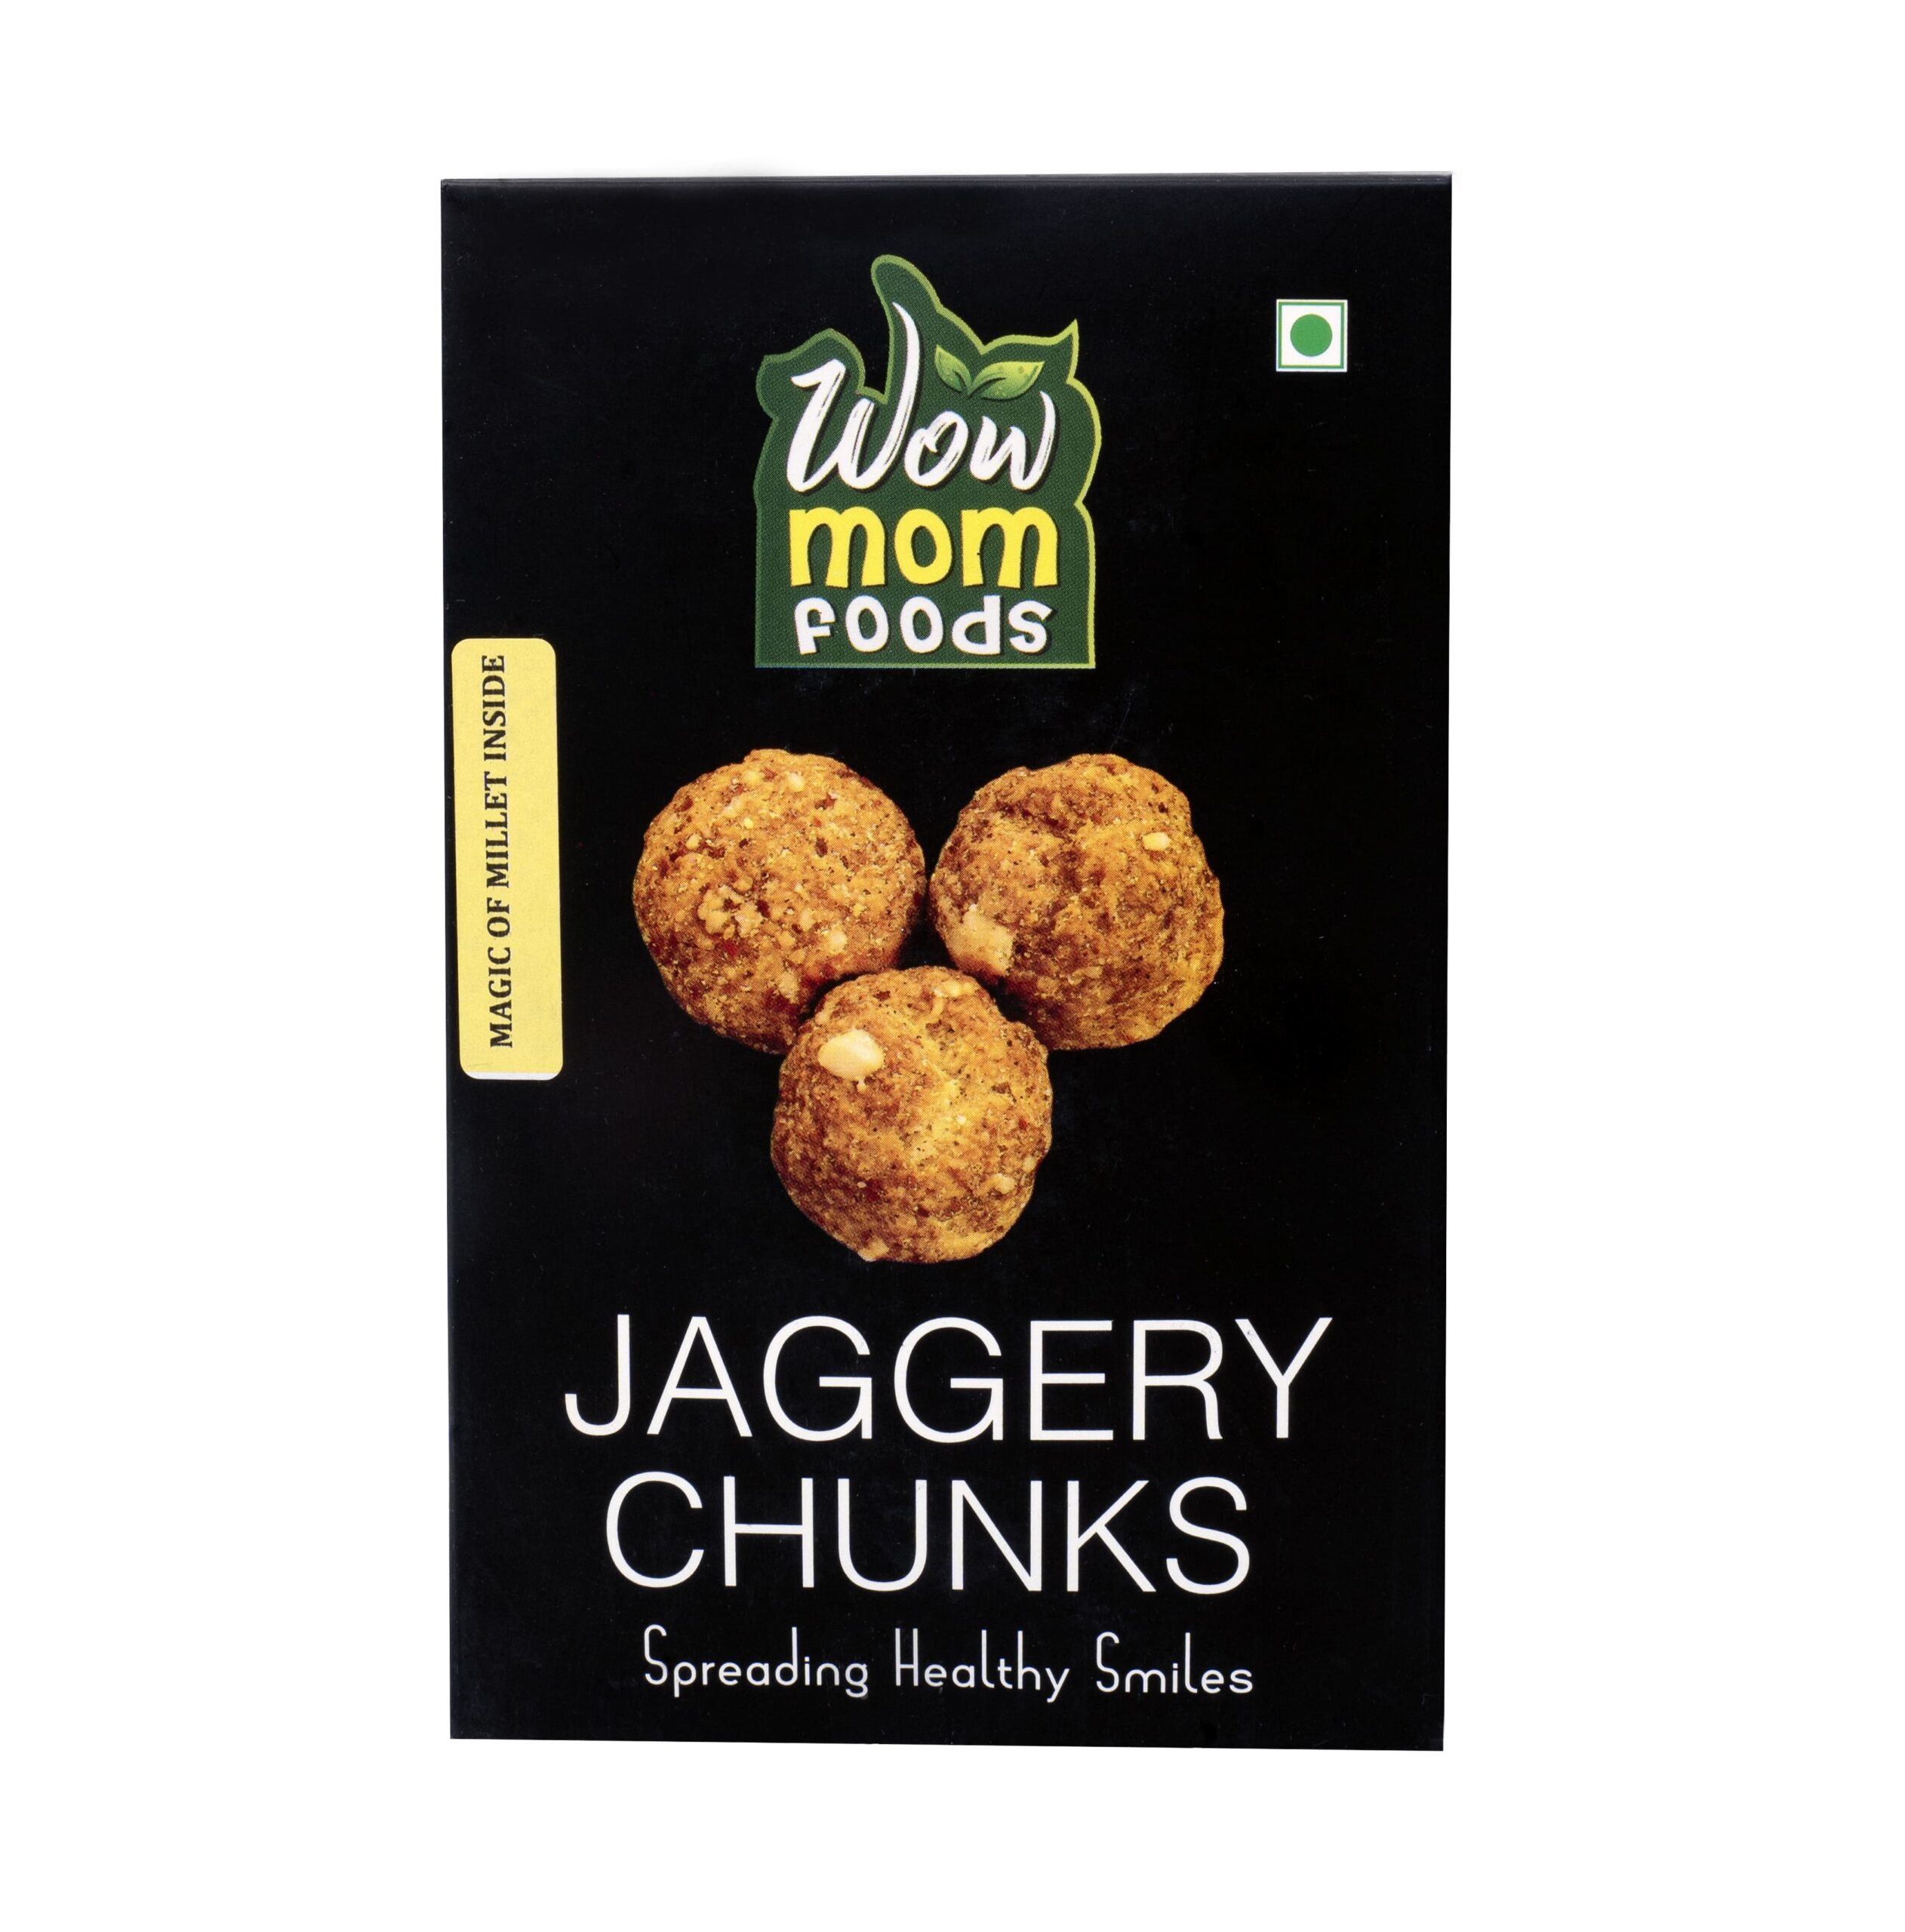 Jaggery Chunks_Wow Mom Foods (2)